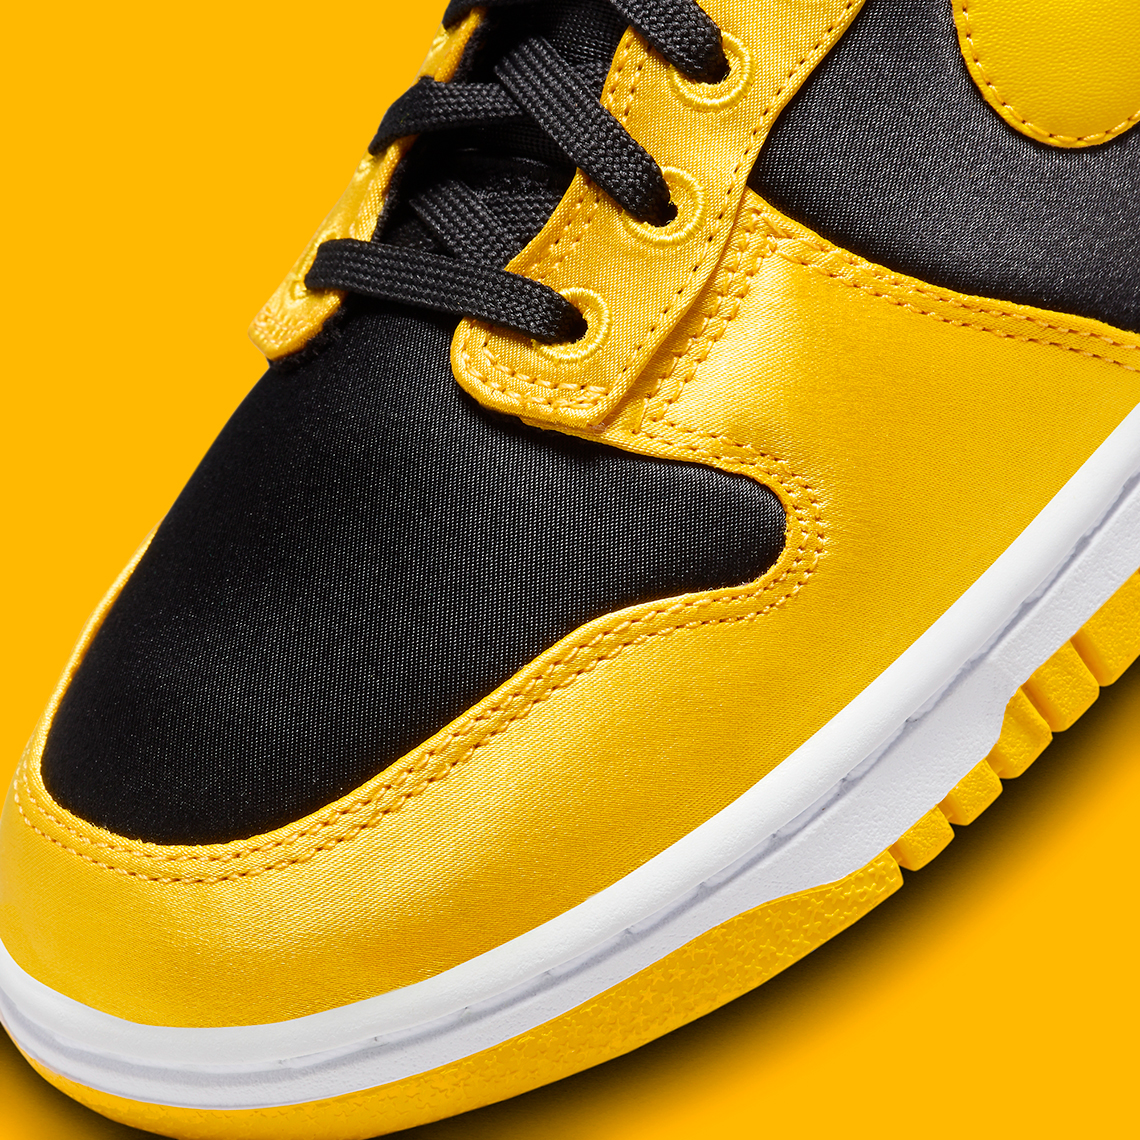 Nike Dunk High Satin Yellow Black Goldenrod Fn4216 001 5